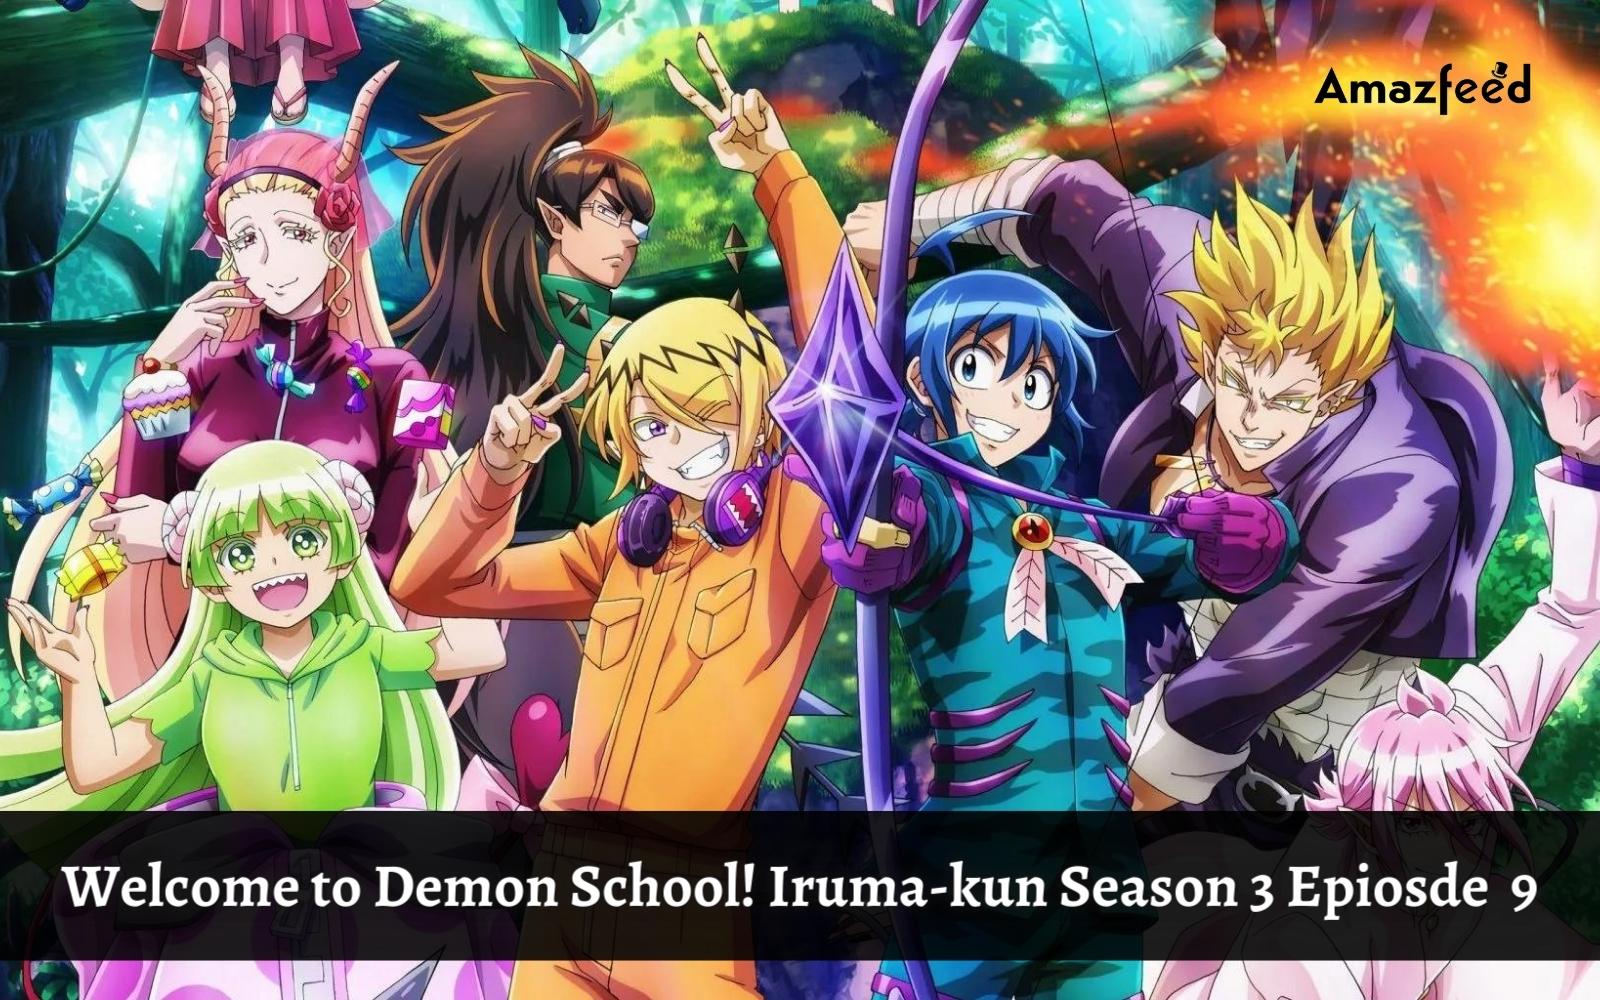 Welcome to Demon School! Iruma-kun Season 3 Epiosde 9